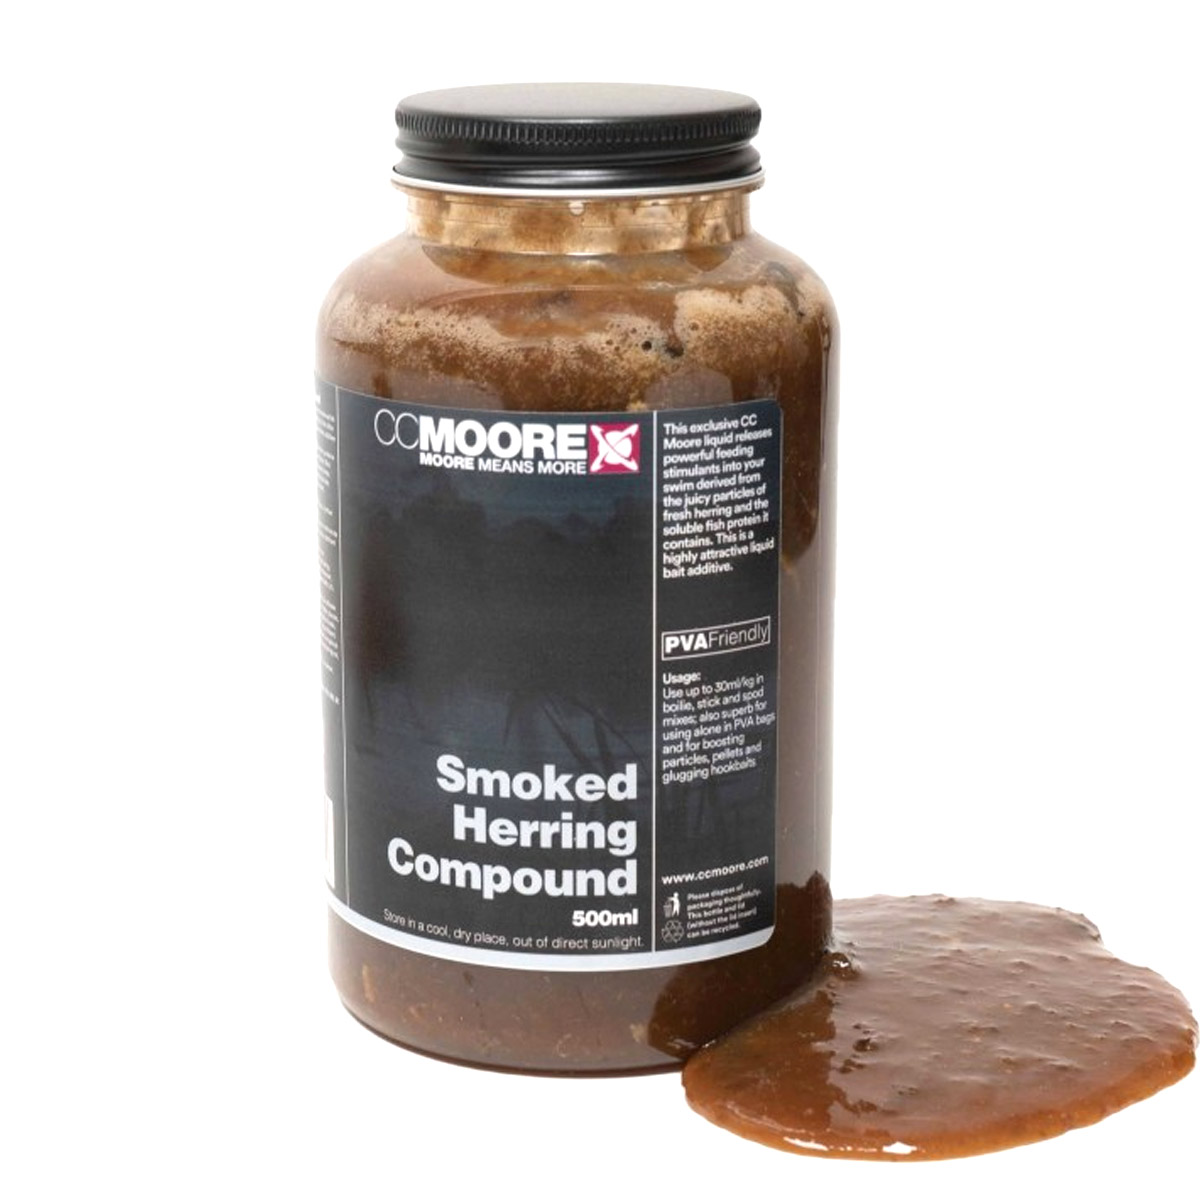 Cc Moore Smoked Herring Compound 500ml